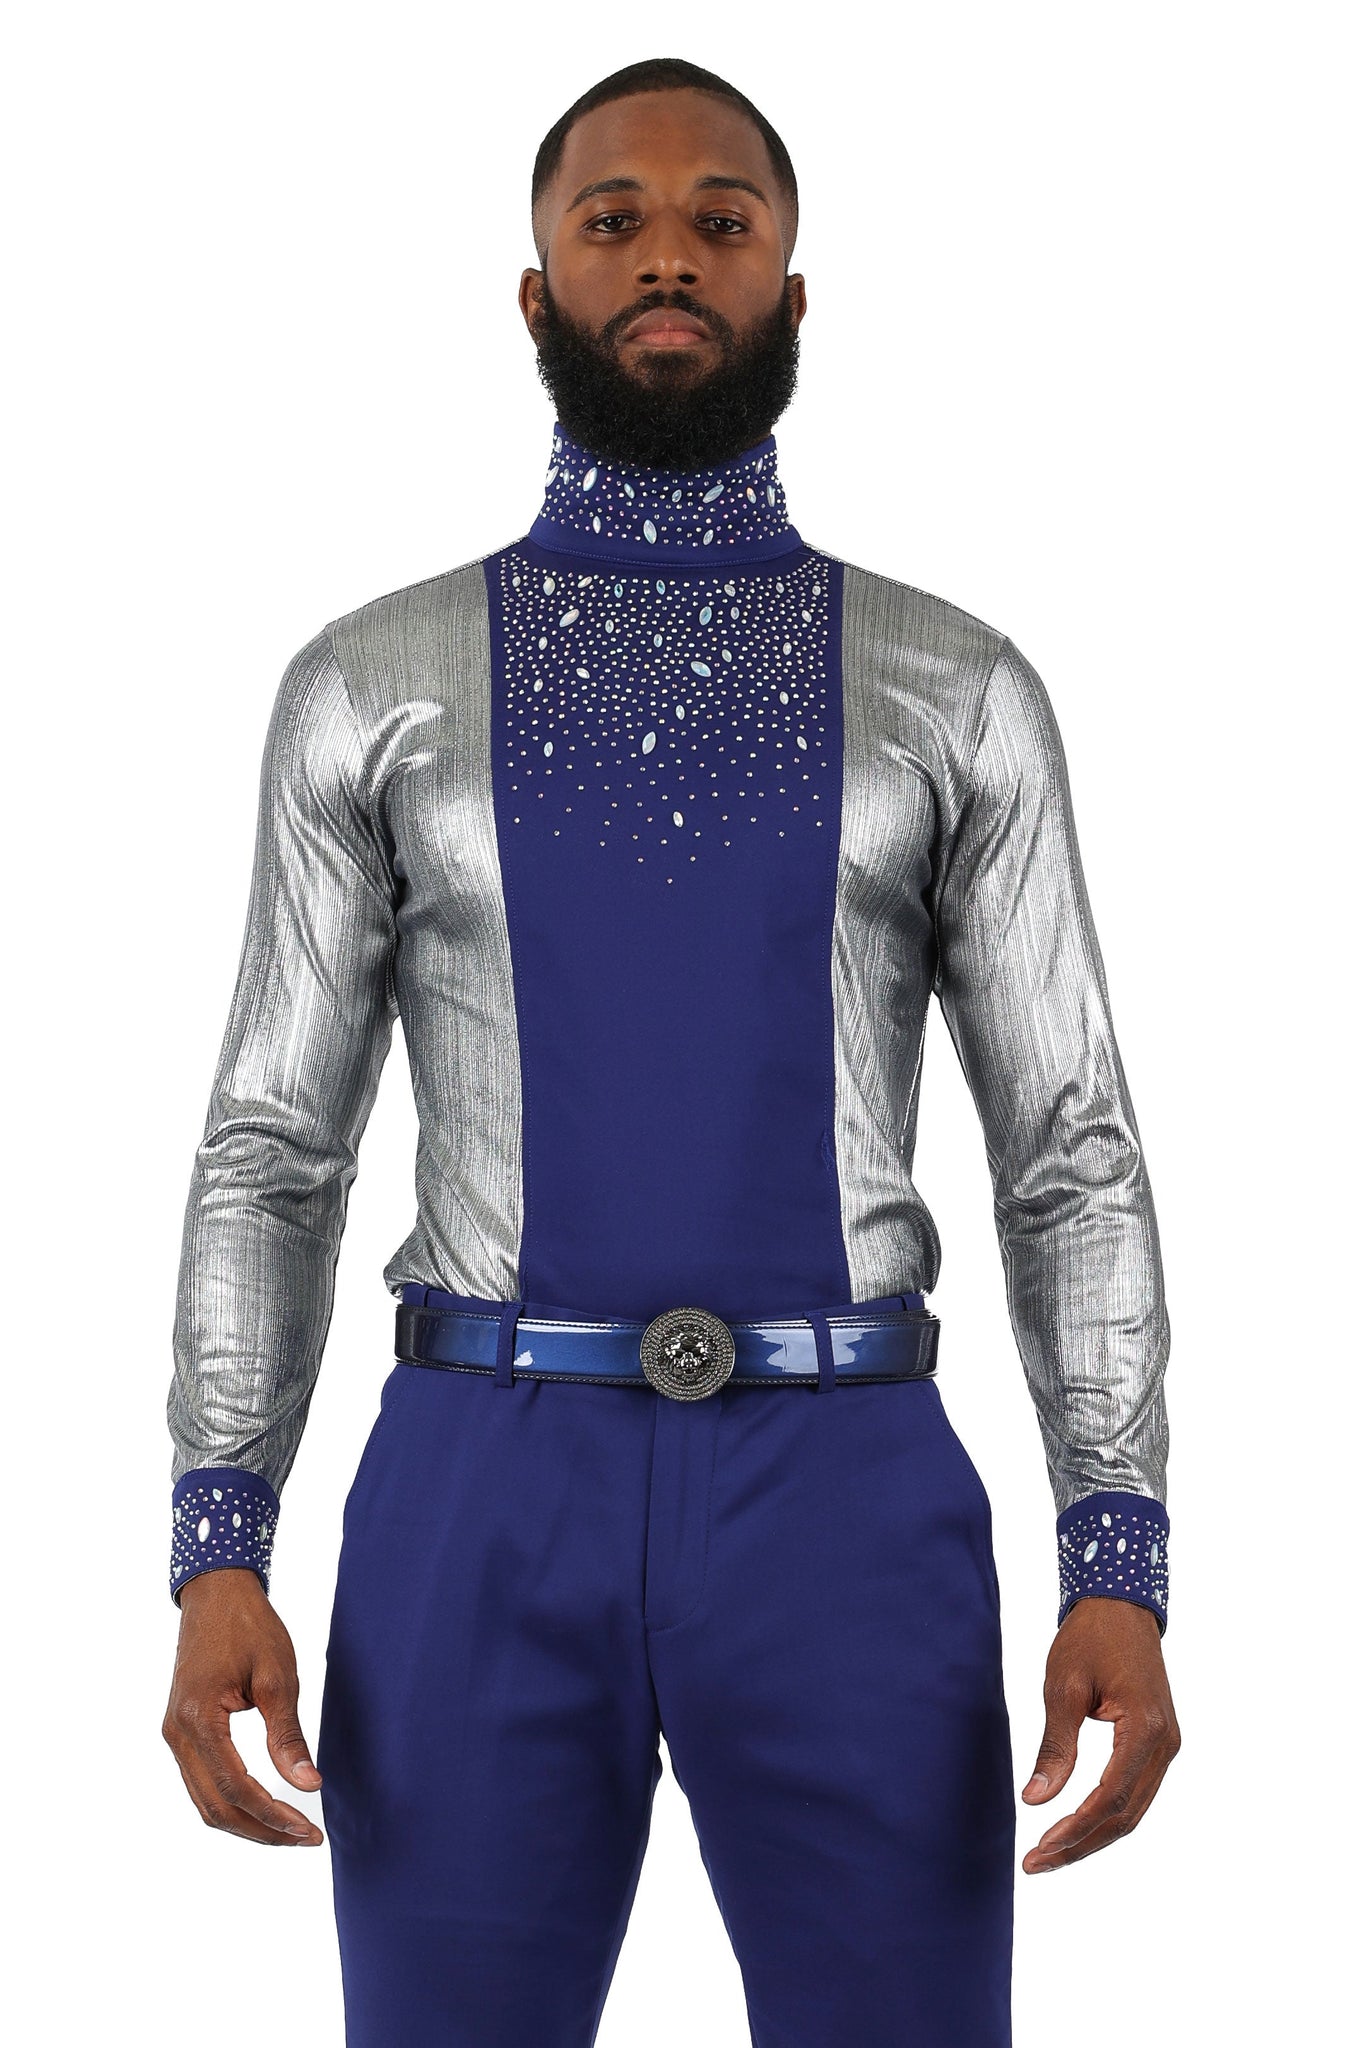 BARABAS Men's Luxury Rhinestone Long Sleeve Turtle Neck shirt 3MT04 Silver and Royal